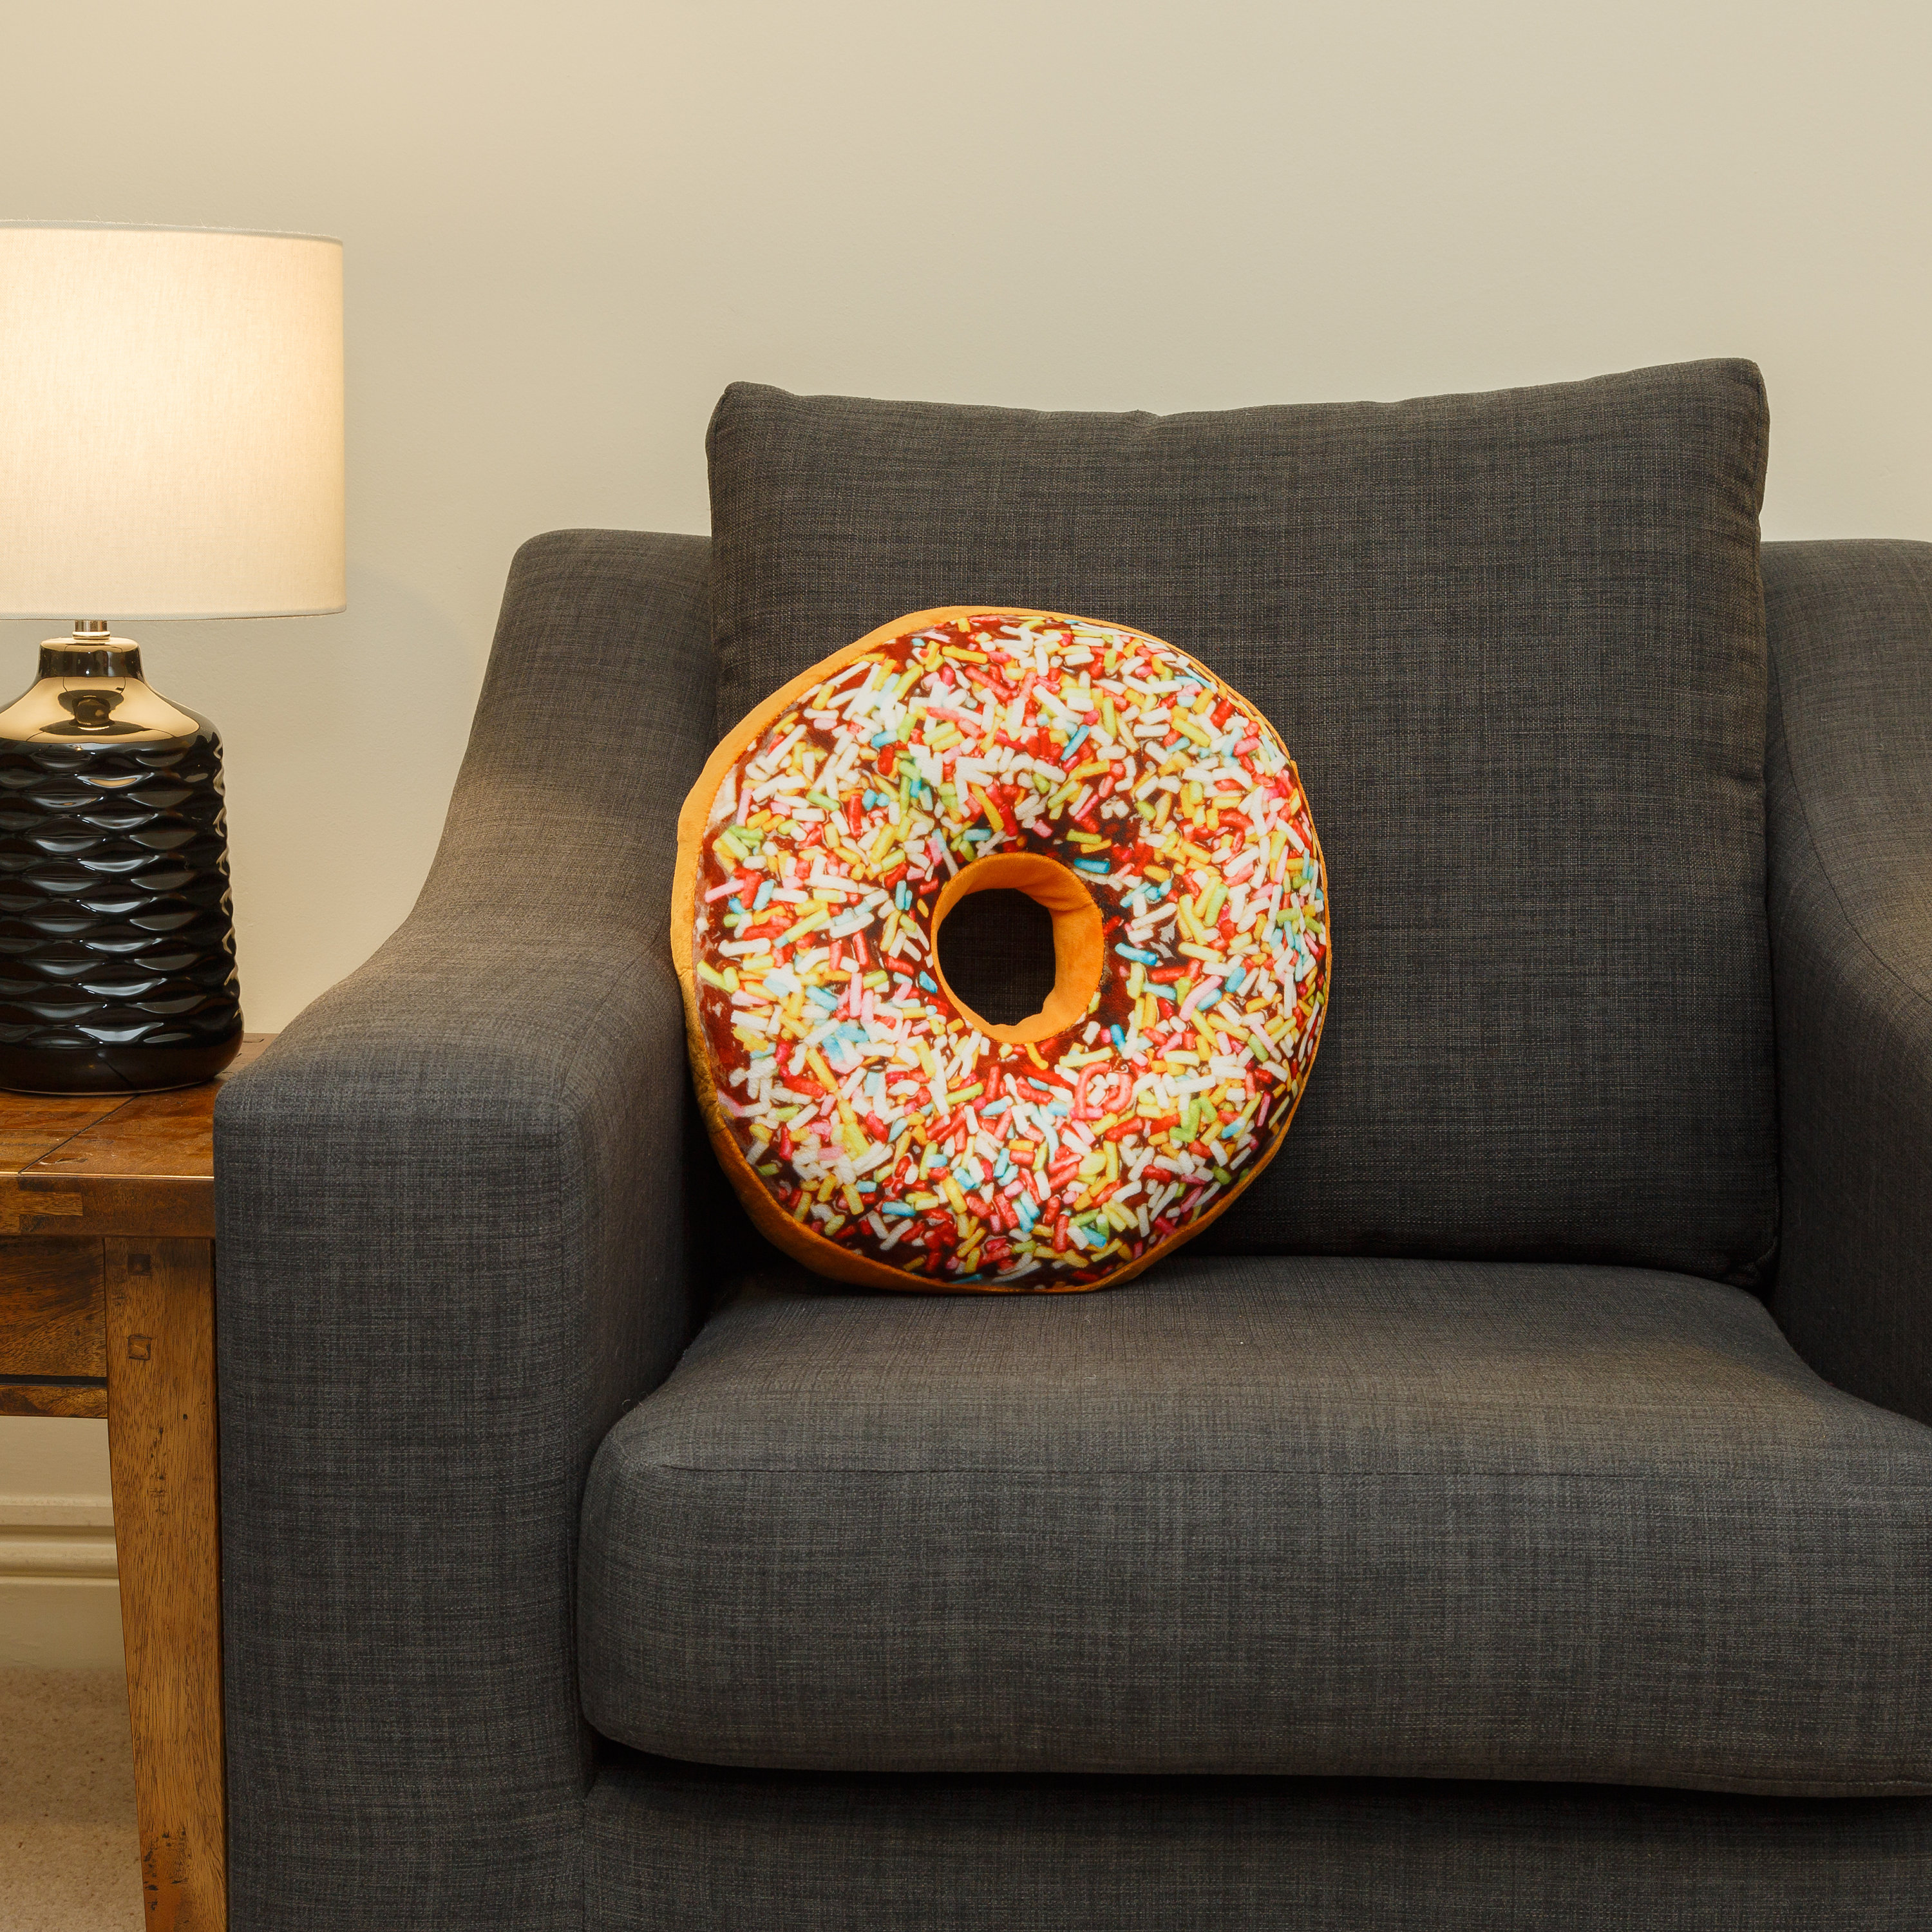 New Donut Pillow Like Real Fantastic Ring Shaped Simulation Food